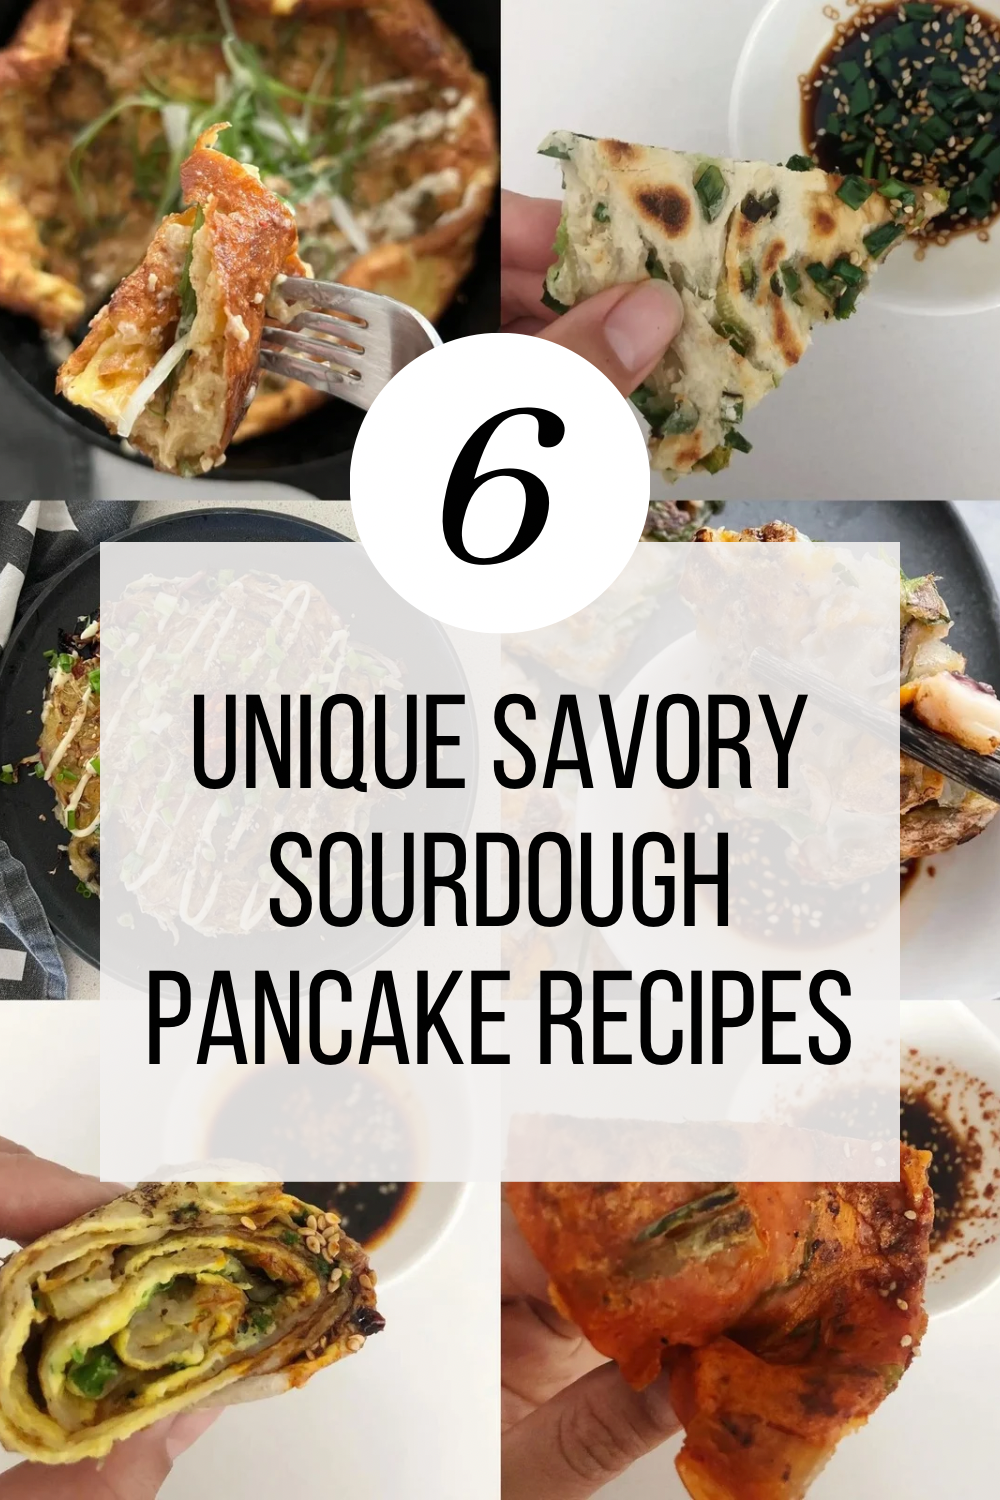 6 Unique Savory Sourdough Pancake Recipes